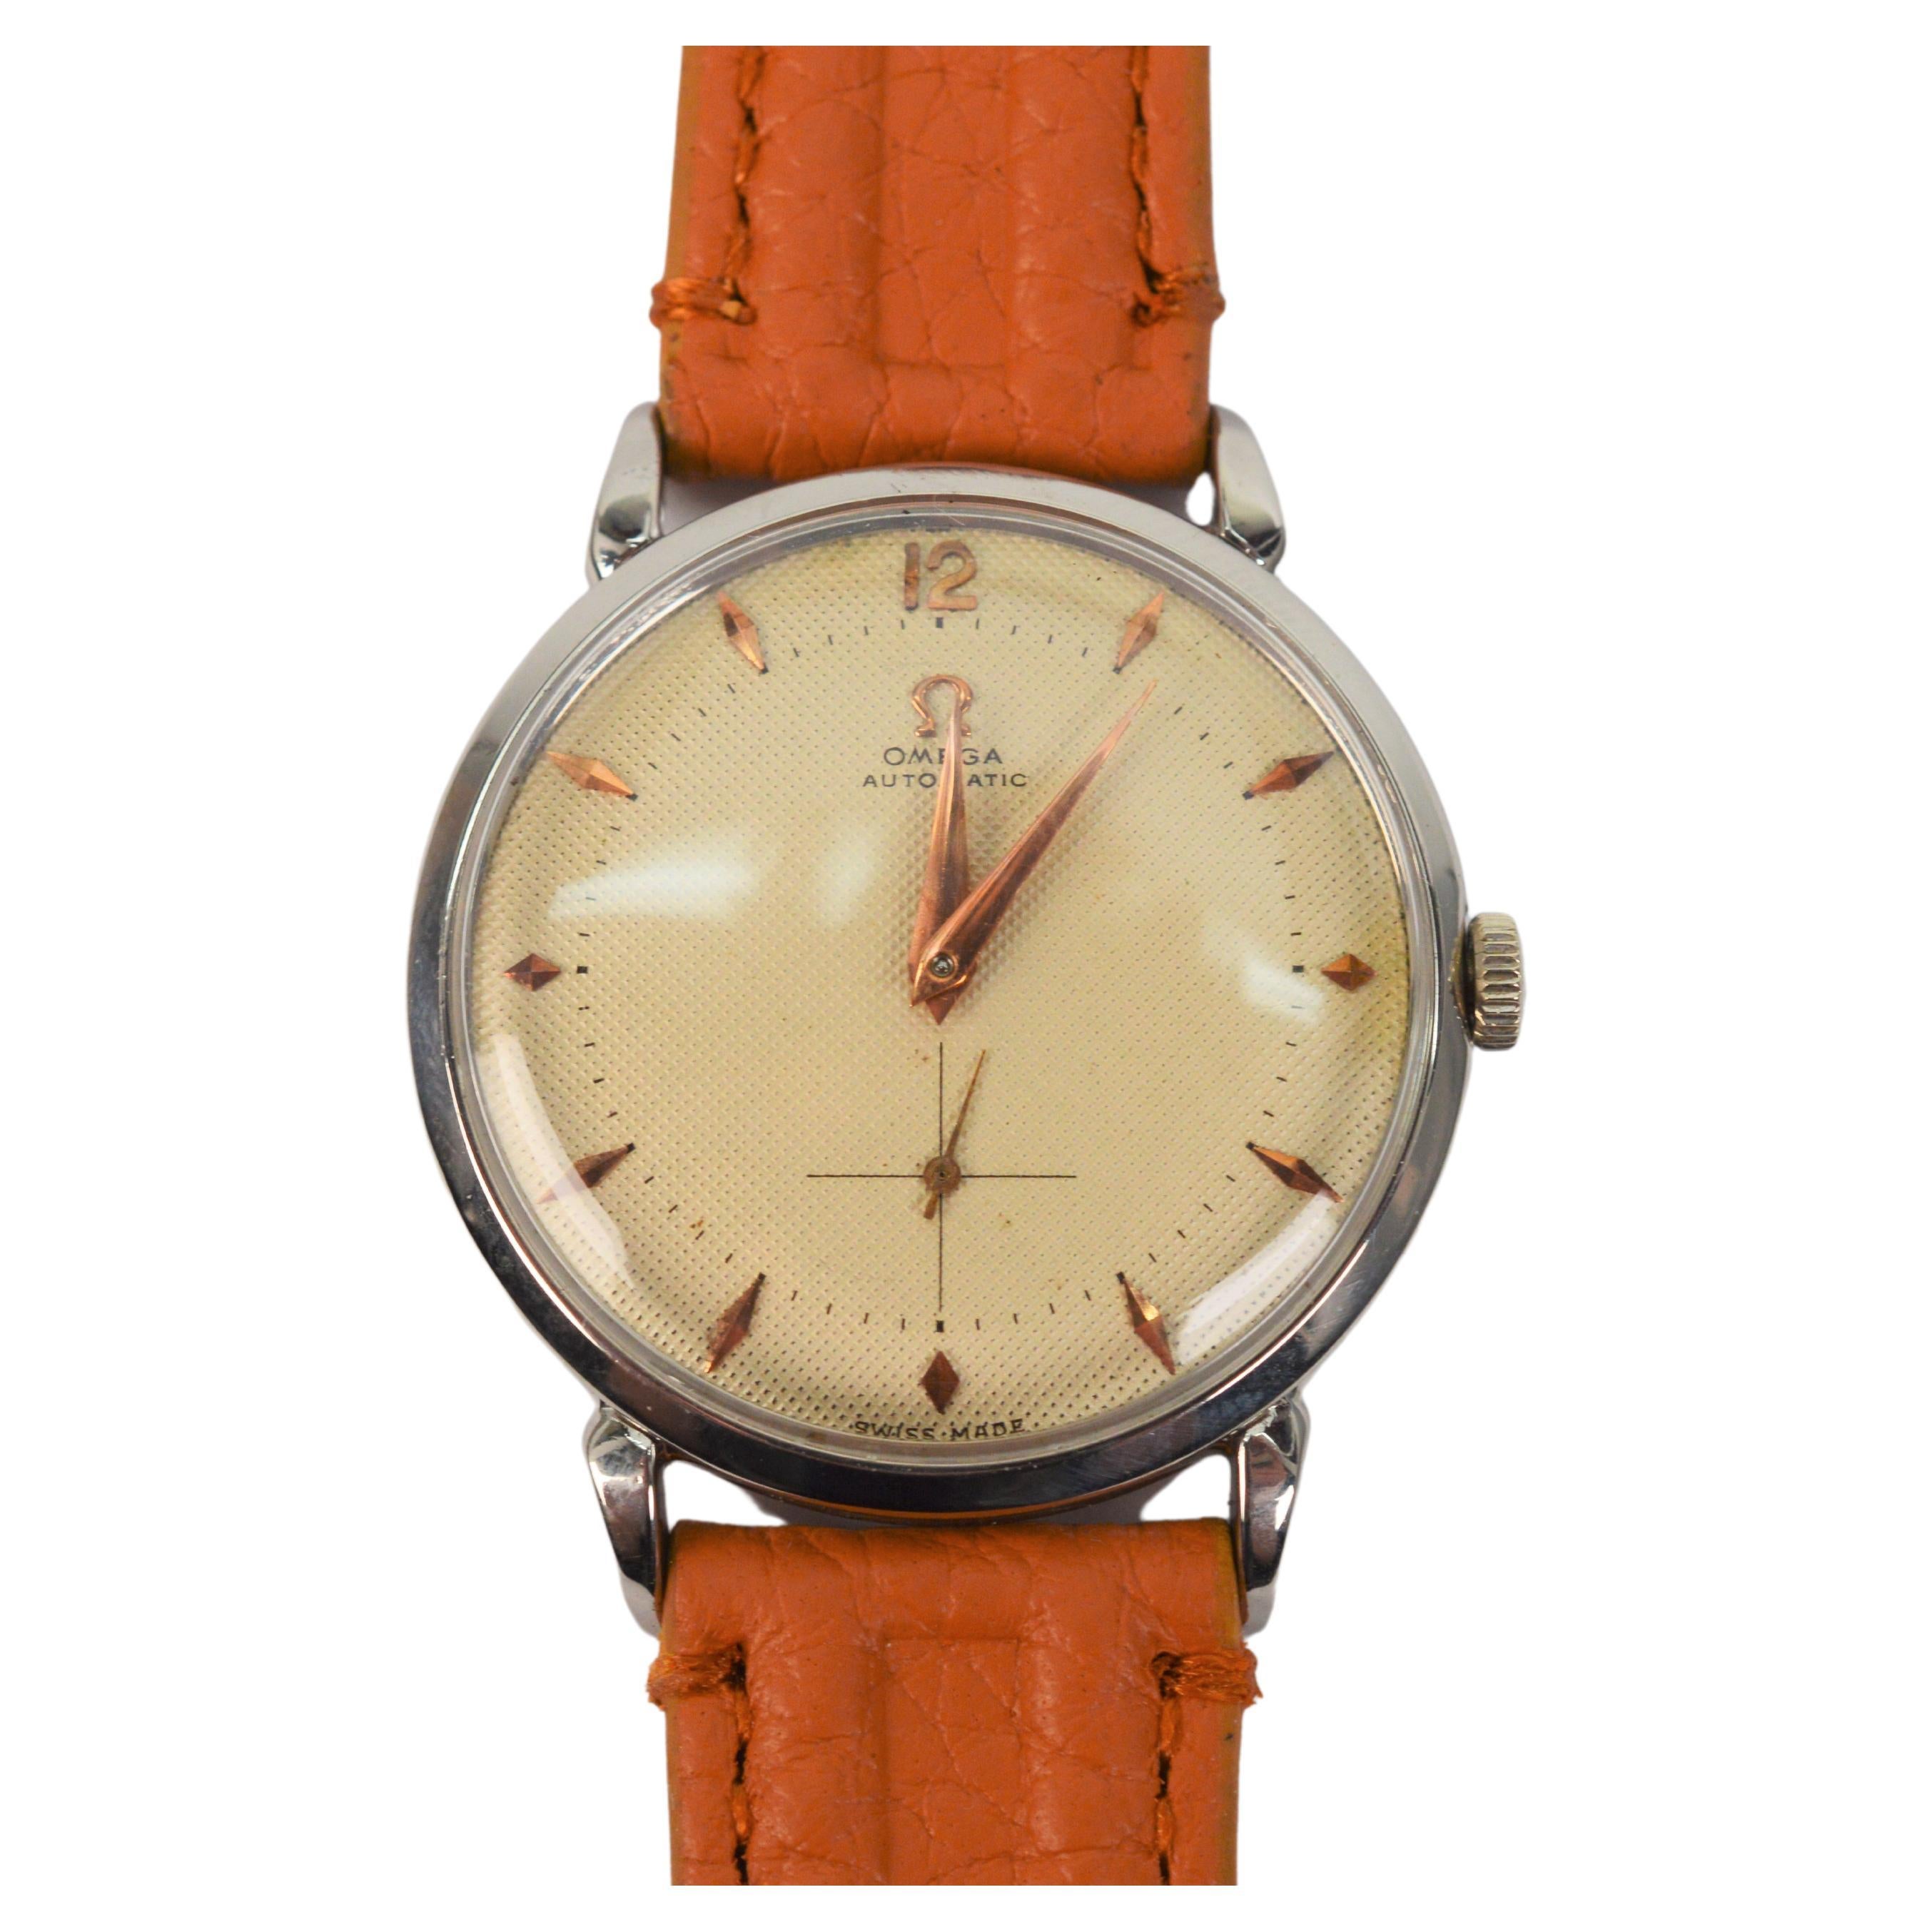 Circa 1952 Omega 342 Steel Automatic Men's Wrist Watch 3